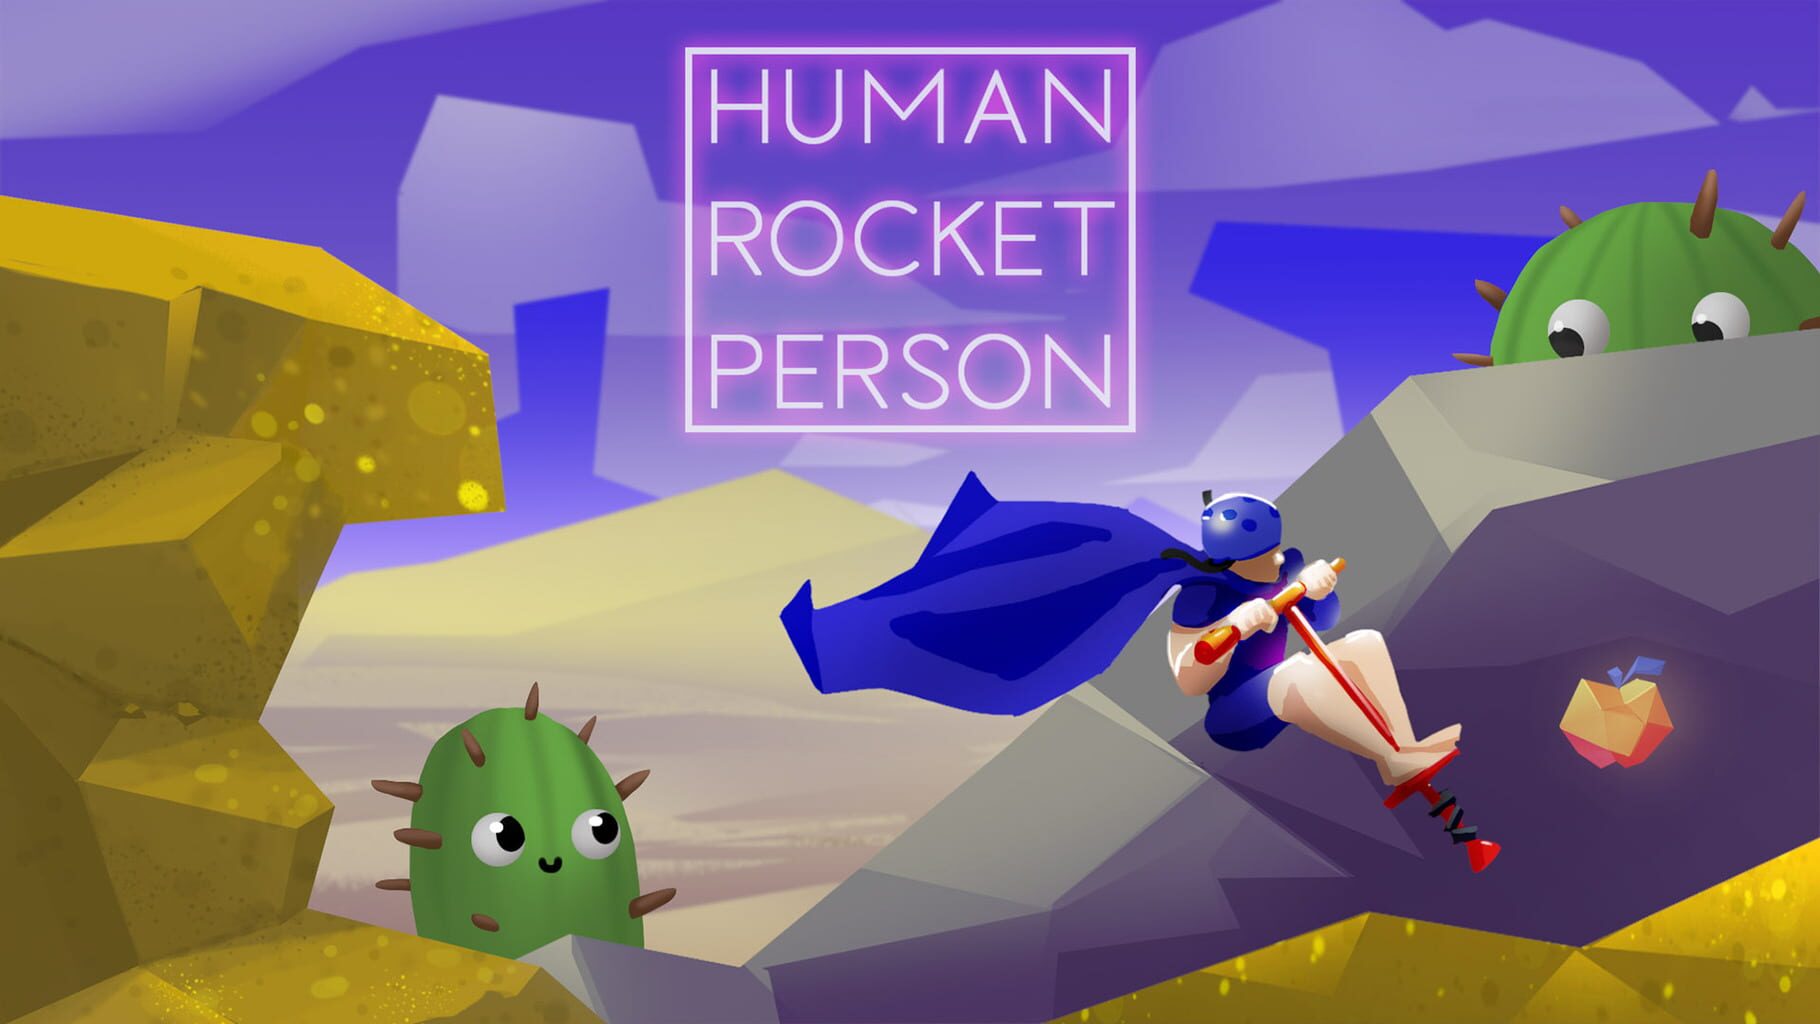 Human Rocket Person artwork